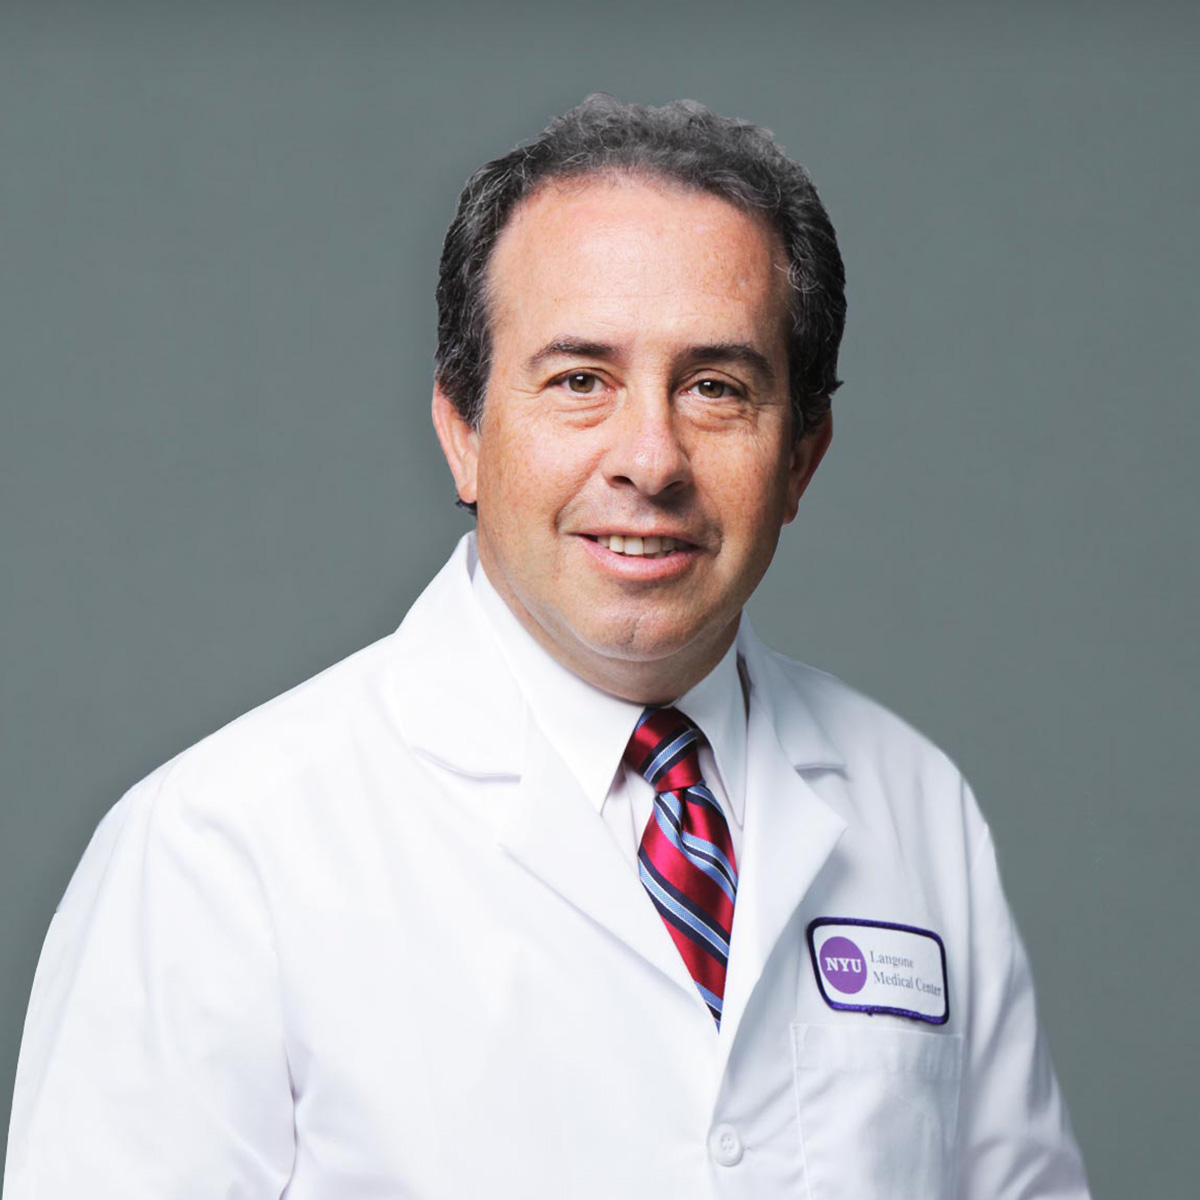 Edward S. Katz,MD. Cardiology, Echocardiography